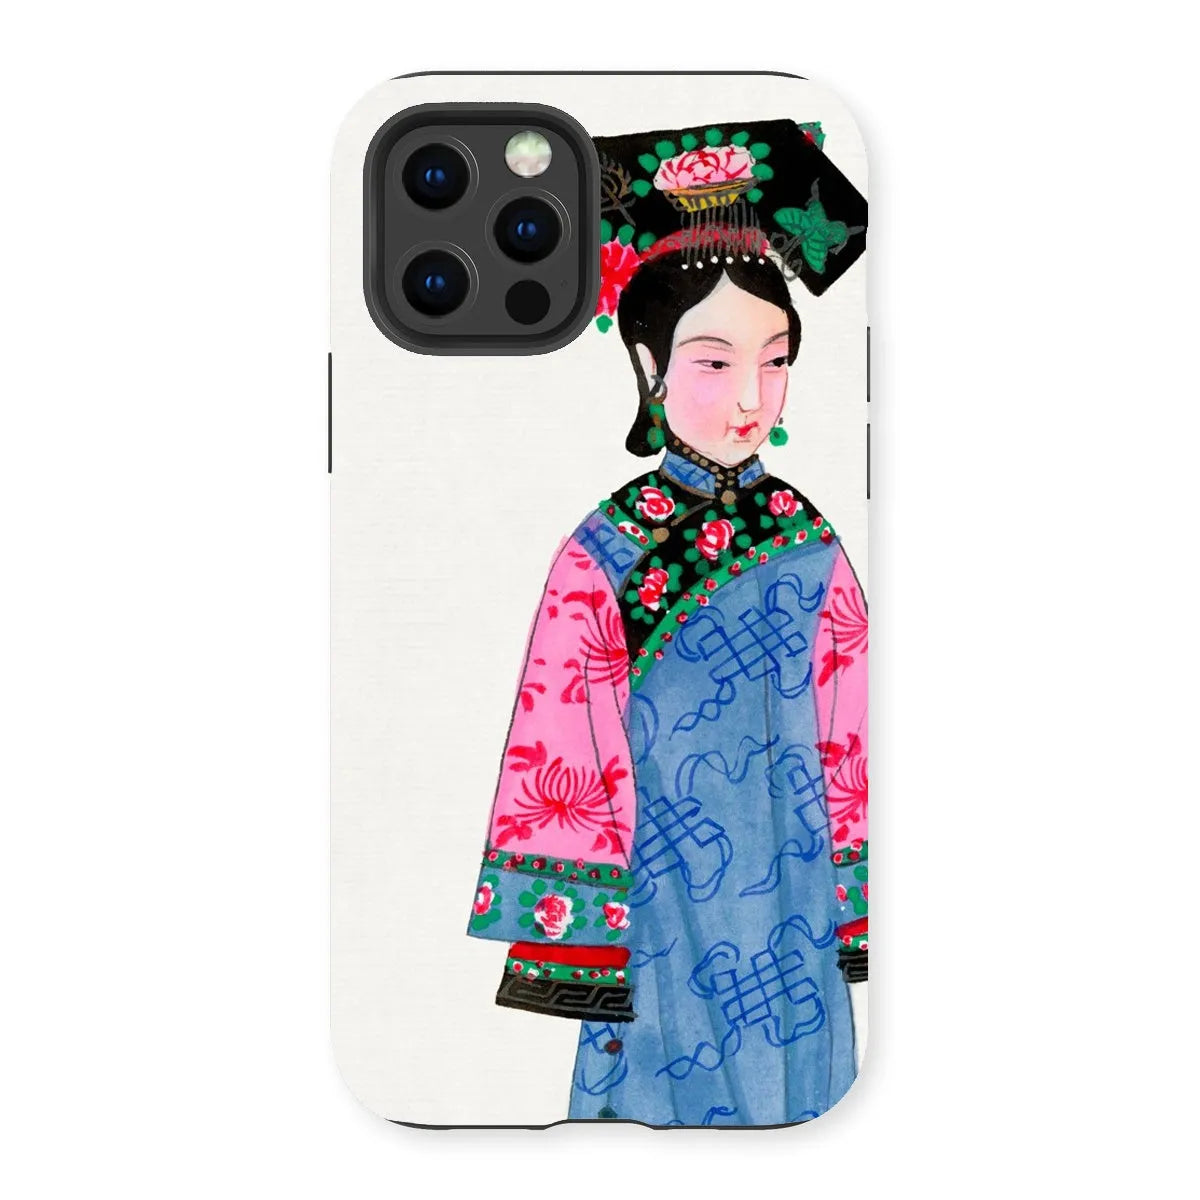 Noblewoman Too - Manchu Aesthetic Art Phone Case - Iphone 13 Pro / Matte - Mobile Phone Cases - Aesthetic Art